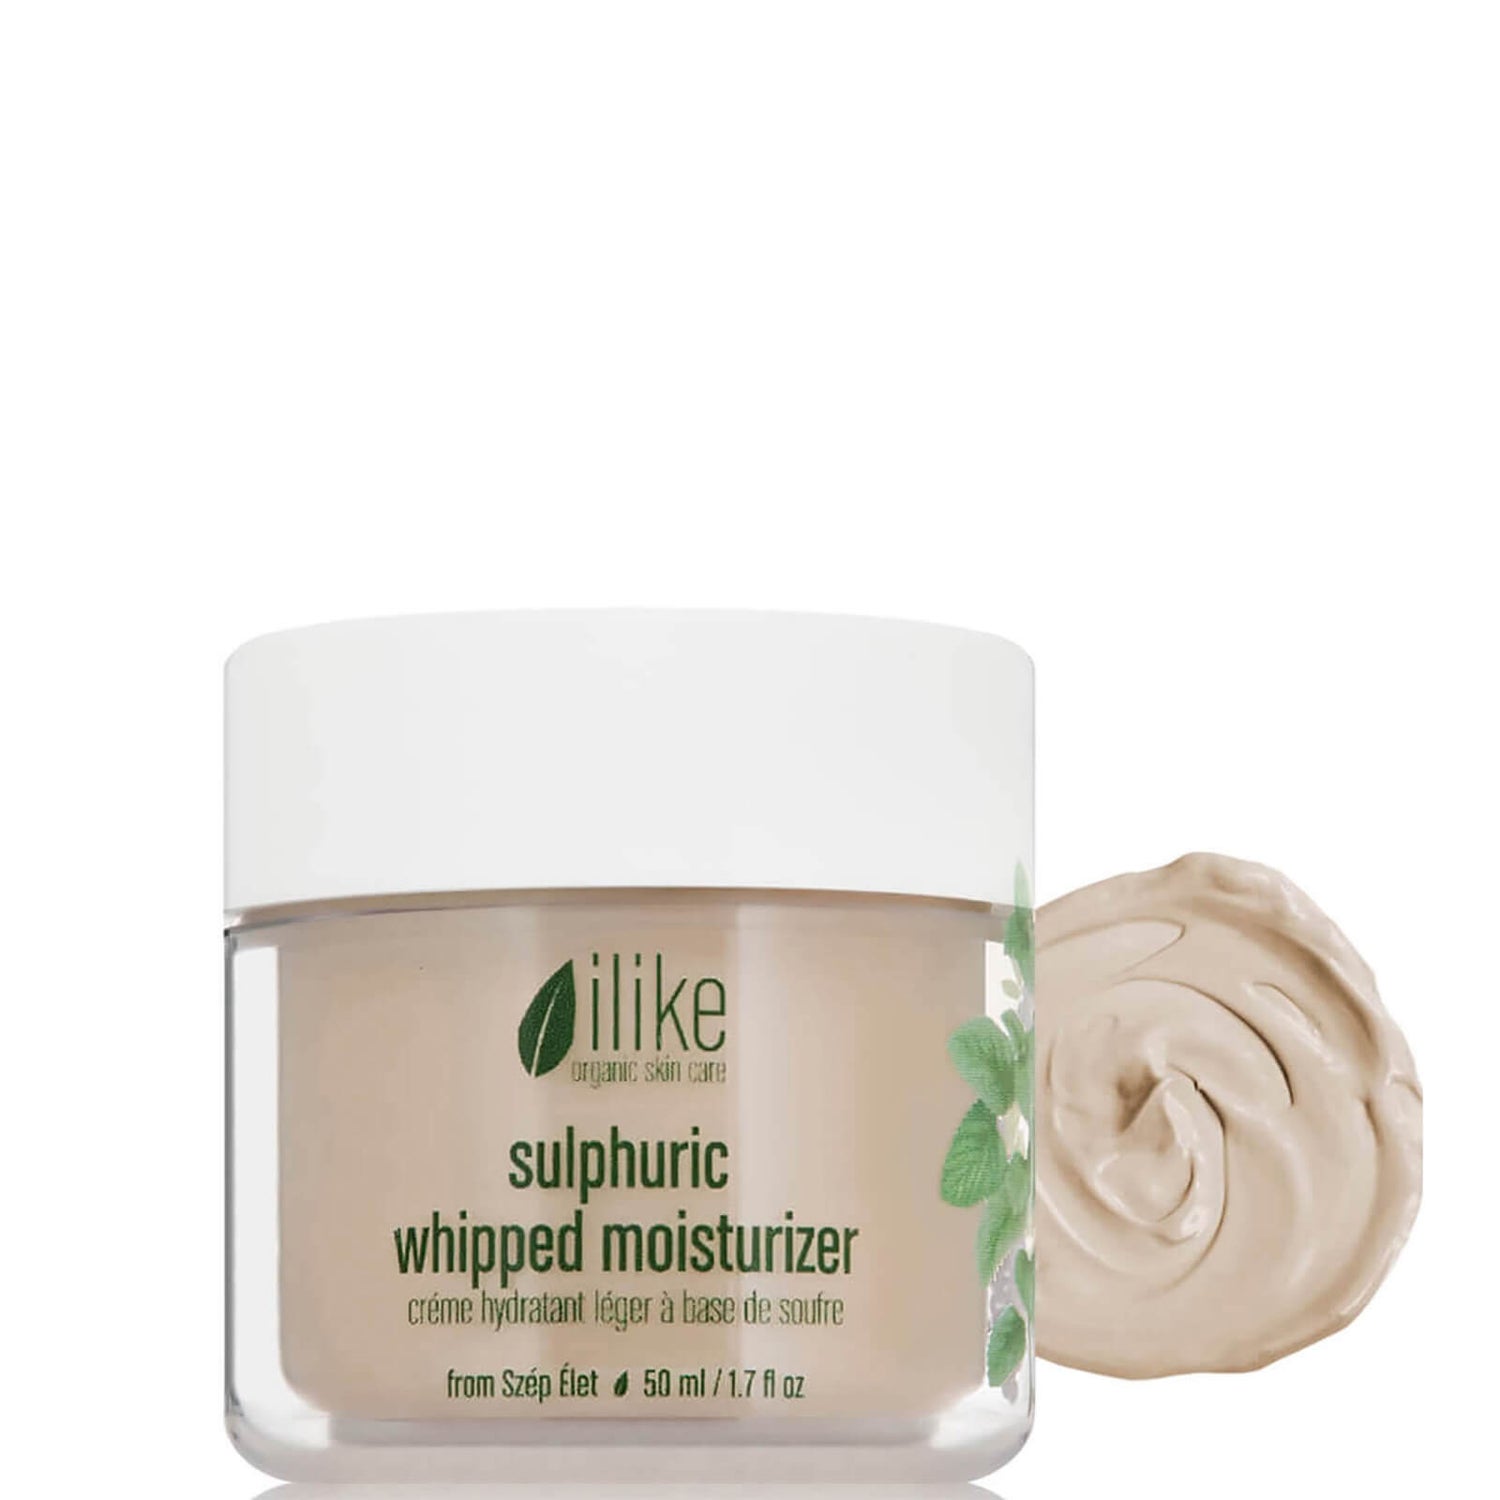 ilike organic skin care Sulphuric Whipped Moisturizer (1.7 fl. oz.)